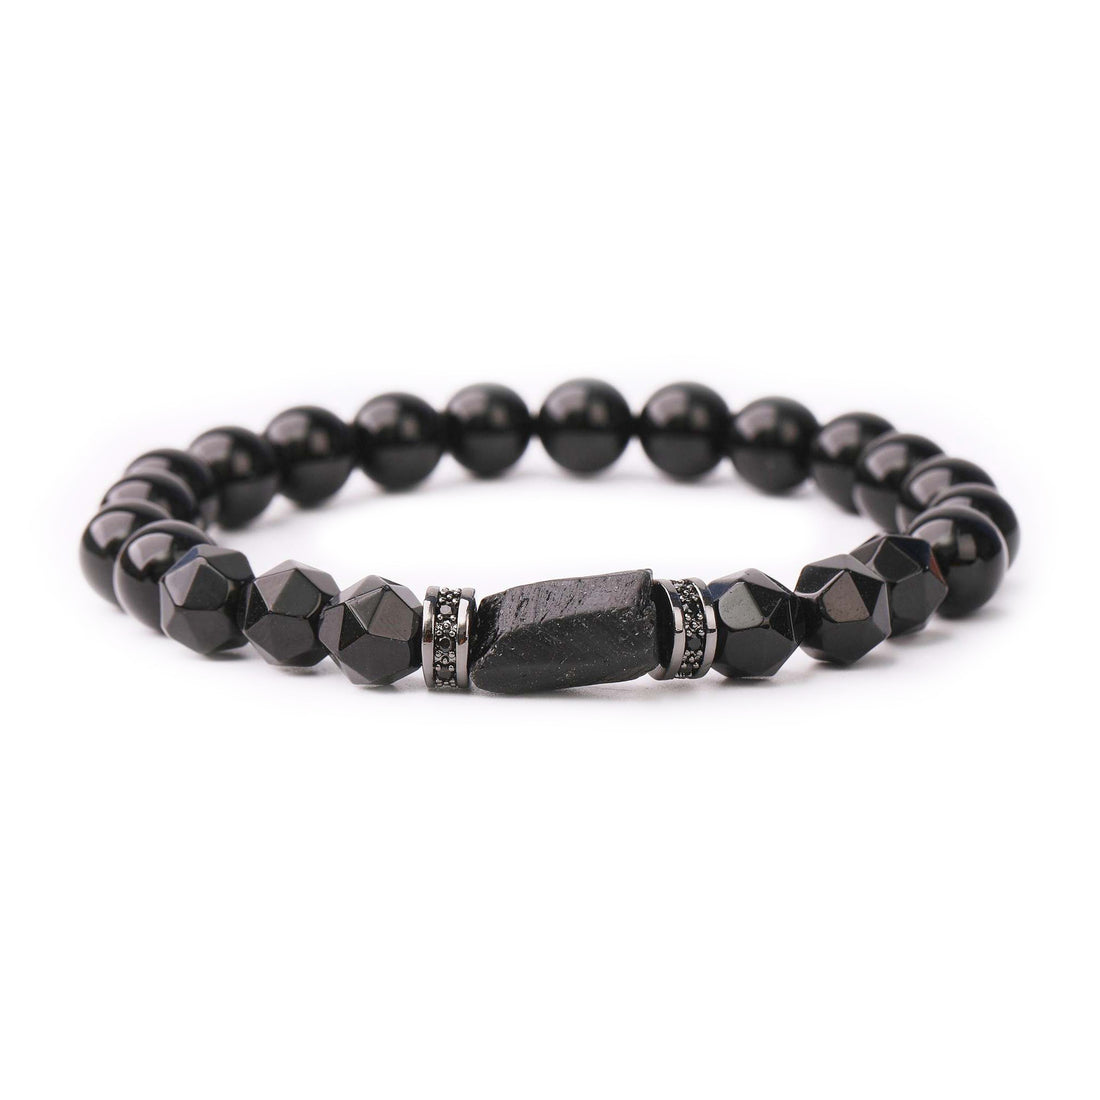 Black Tourmaline Bead Bracelet Handmade Natural Stone 2023 Black Onyx Stylish Healing Men's Women's Gifts